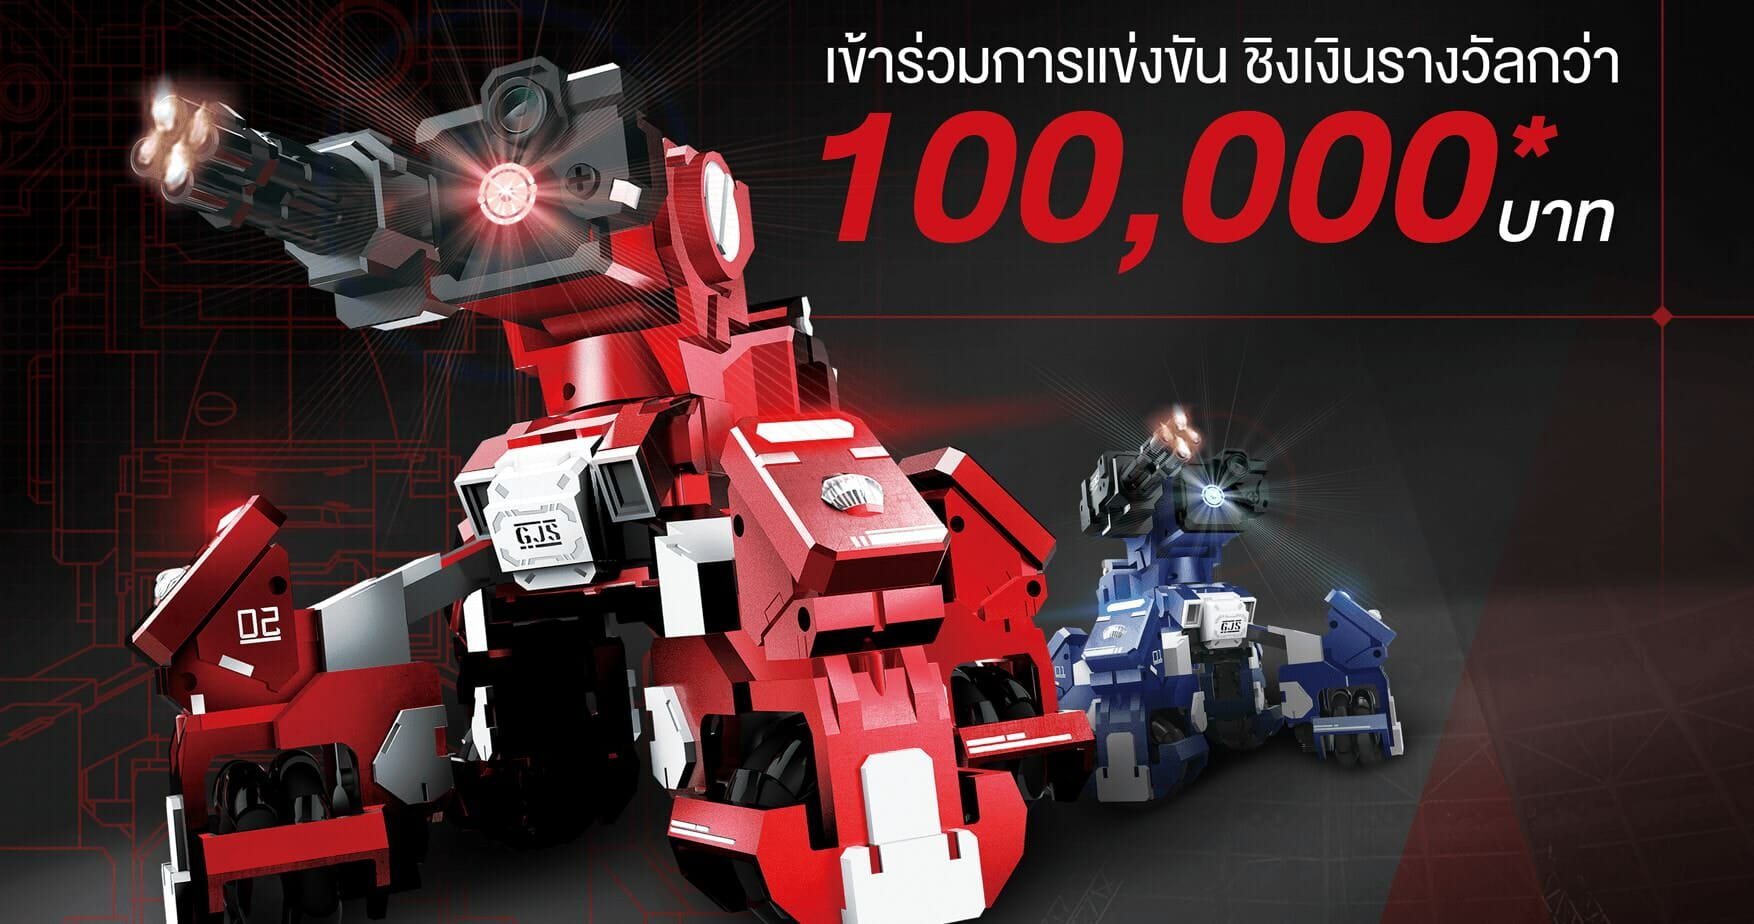 GJS ROBOT ชวนเกมเมอร์ร่วมท้าประลองฝีมือ ในงาน Thailand Game Expo by AIS eSports 1